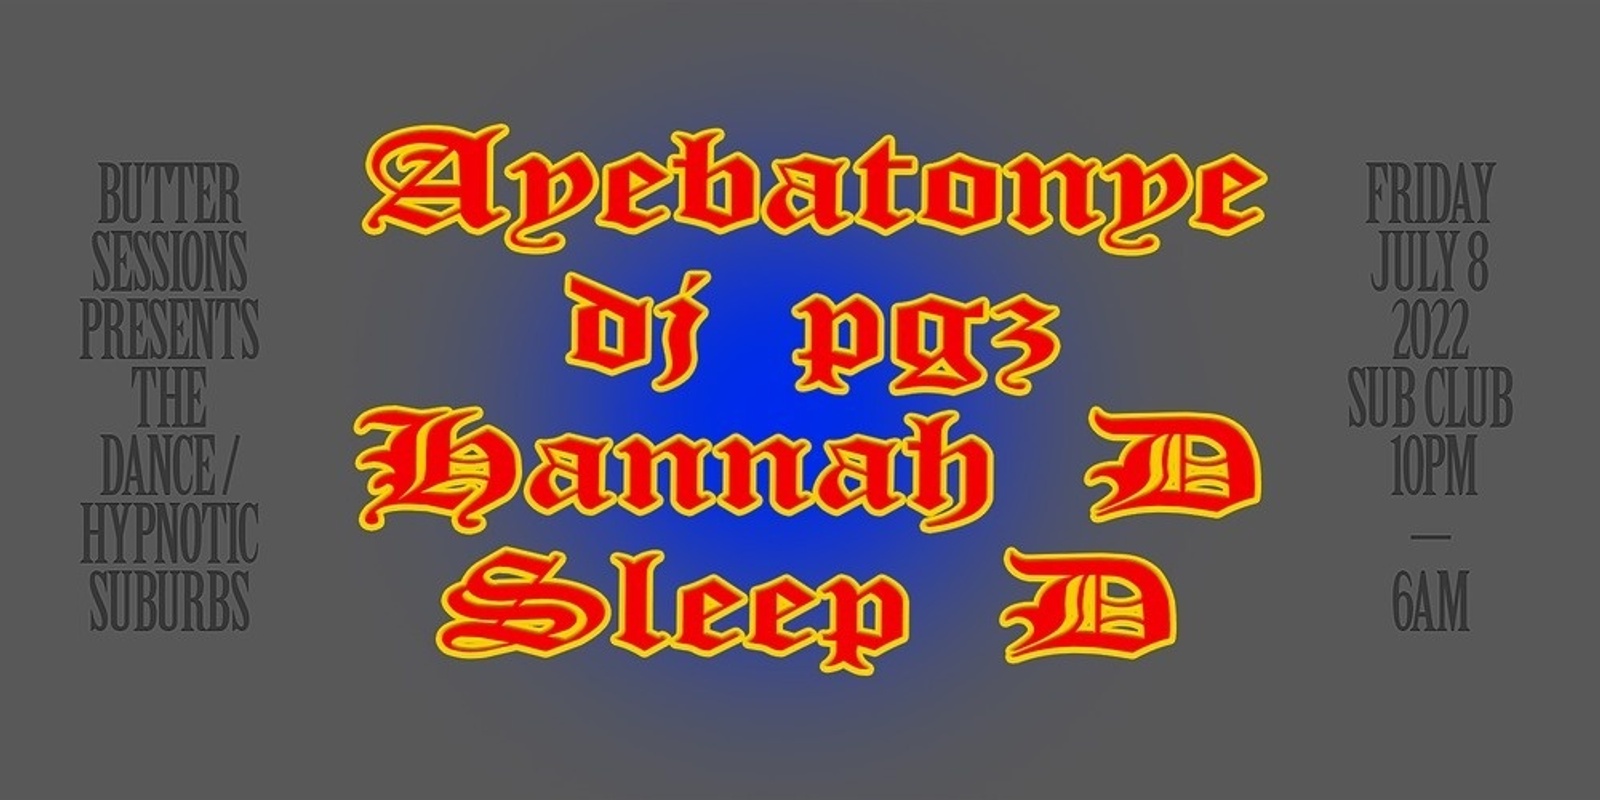 Banner image for Butter Sessions: dj pgz, Sleep D, Ayebatonye, Hannah D